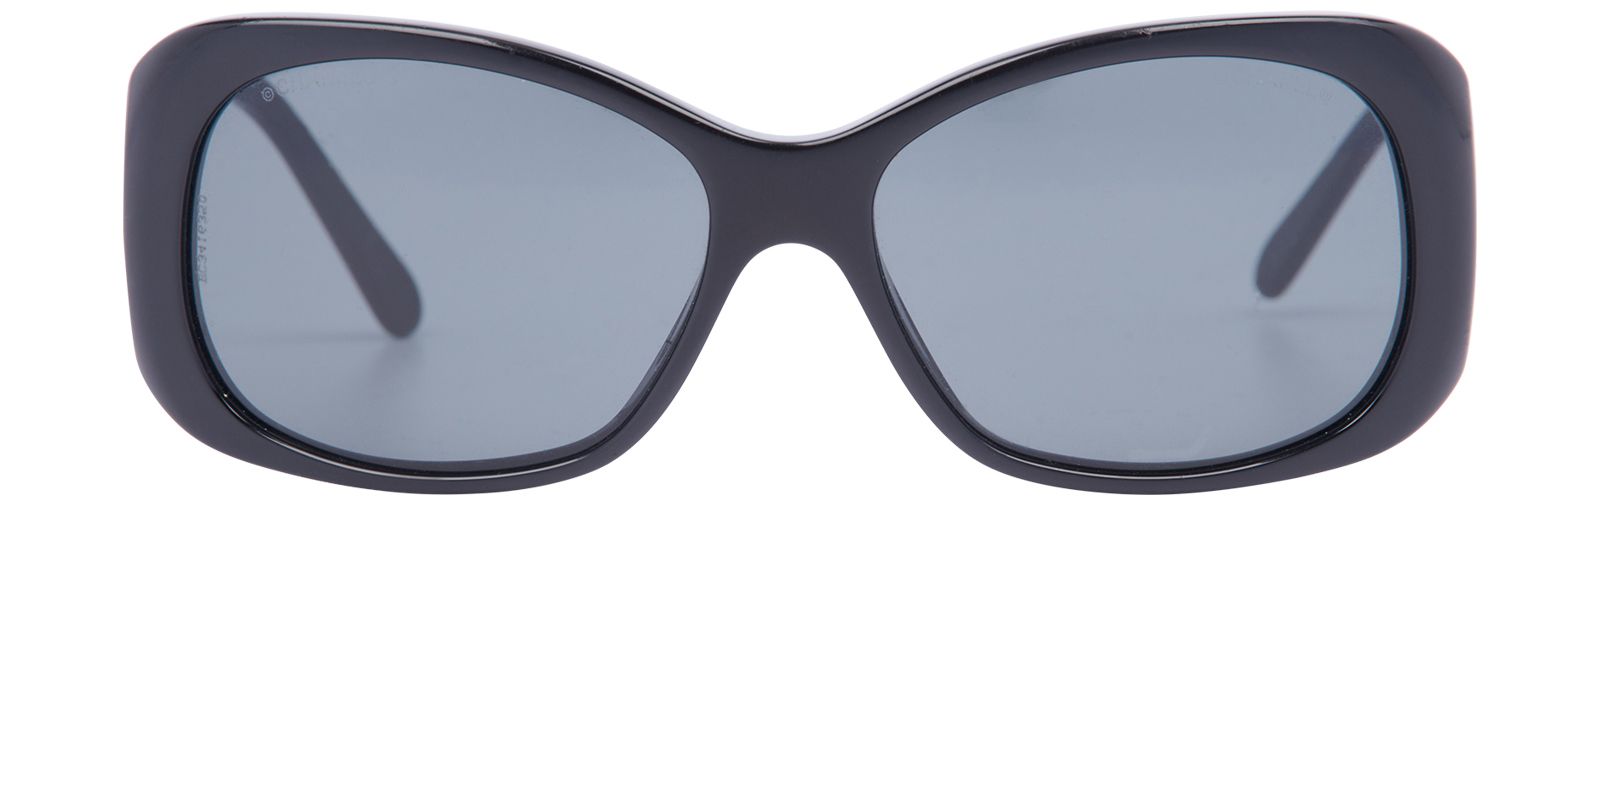 Chanel 5123 Symbols Sunglasses